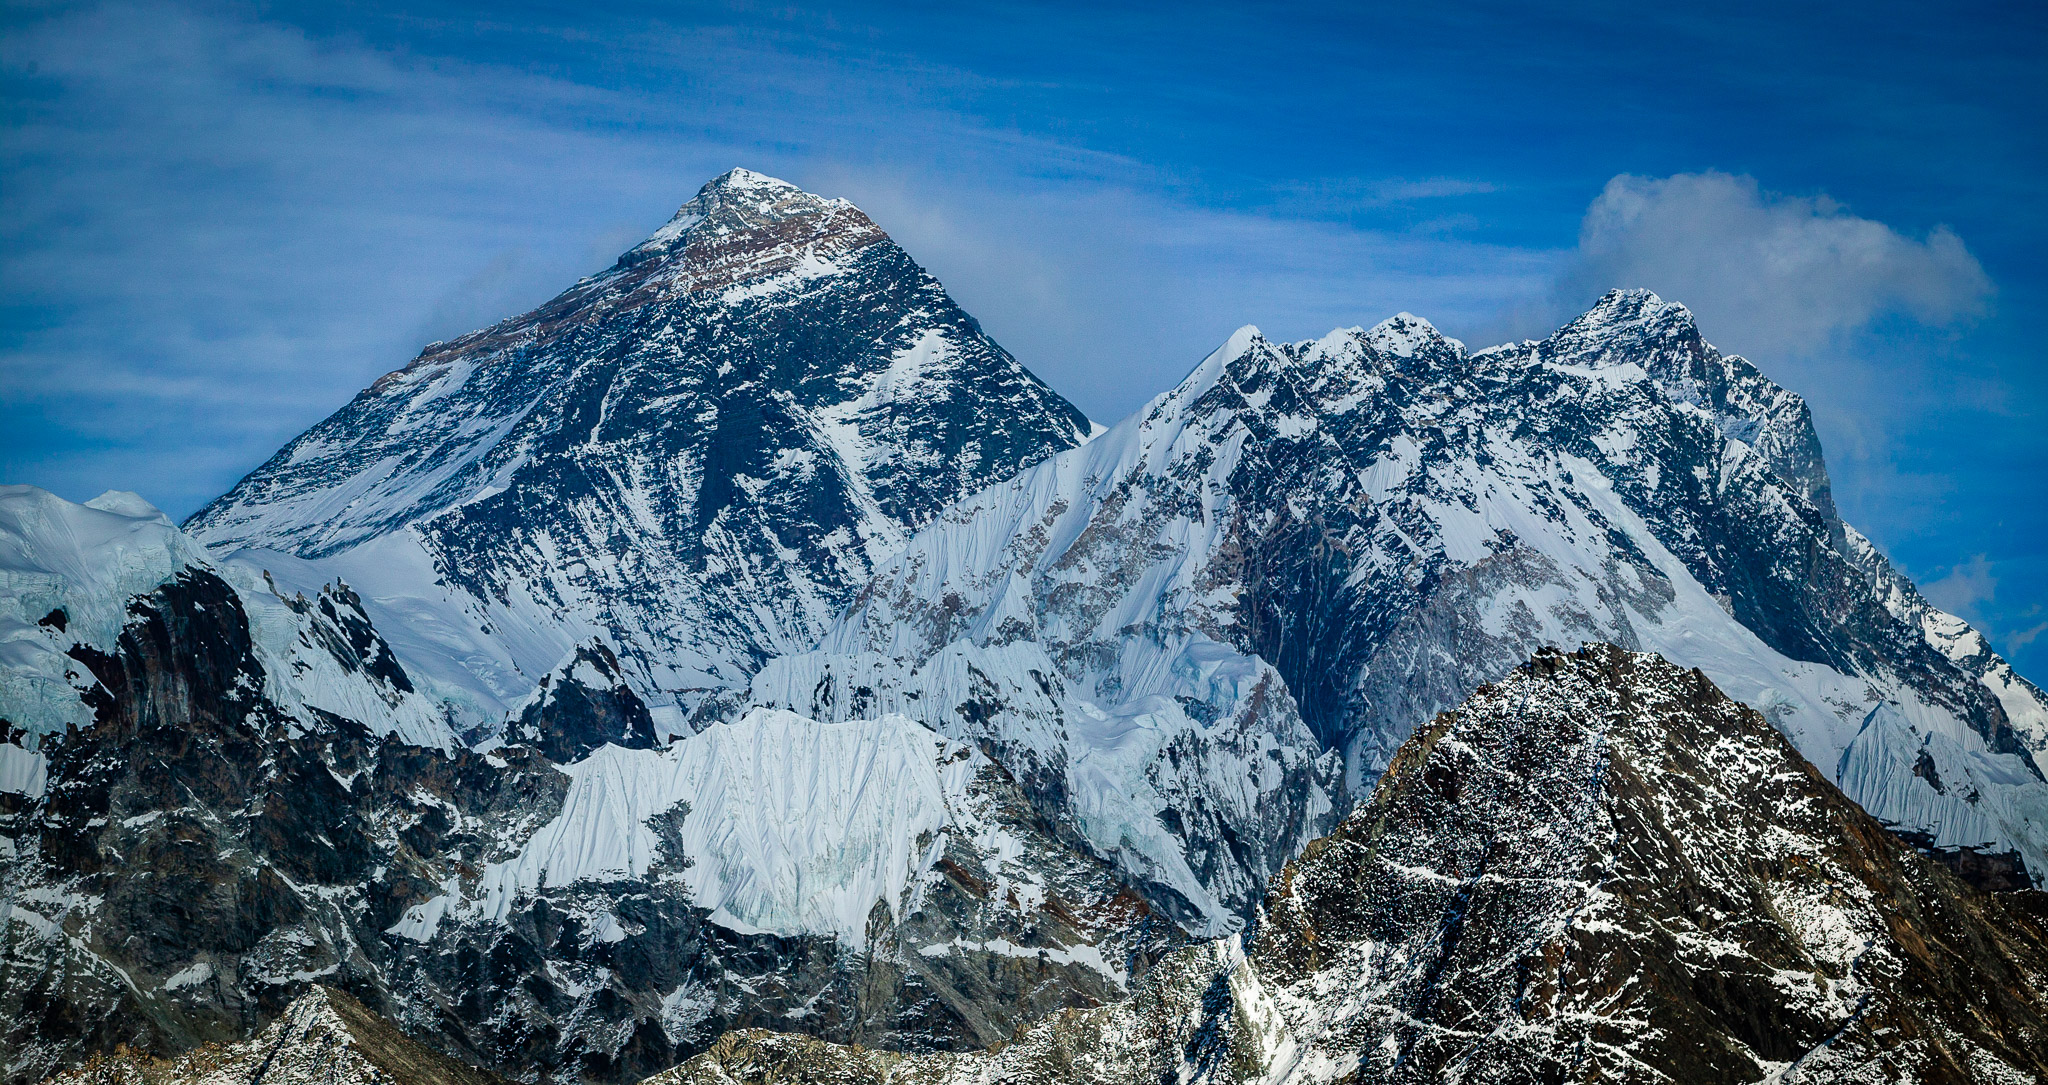 Everest, Lhotse & Nuptse as seen from Gokyo Ri